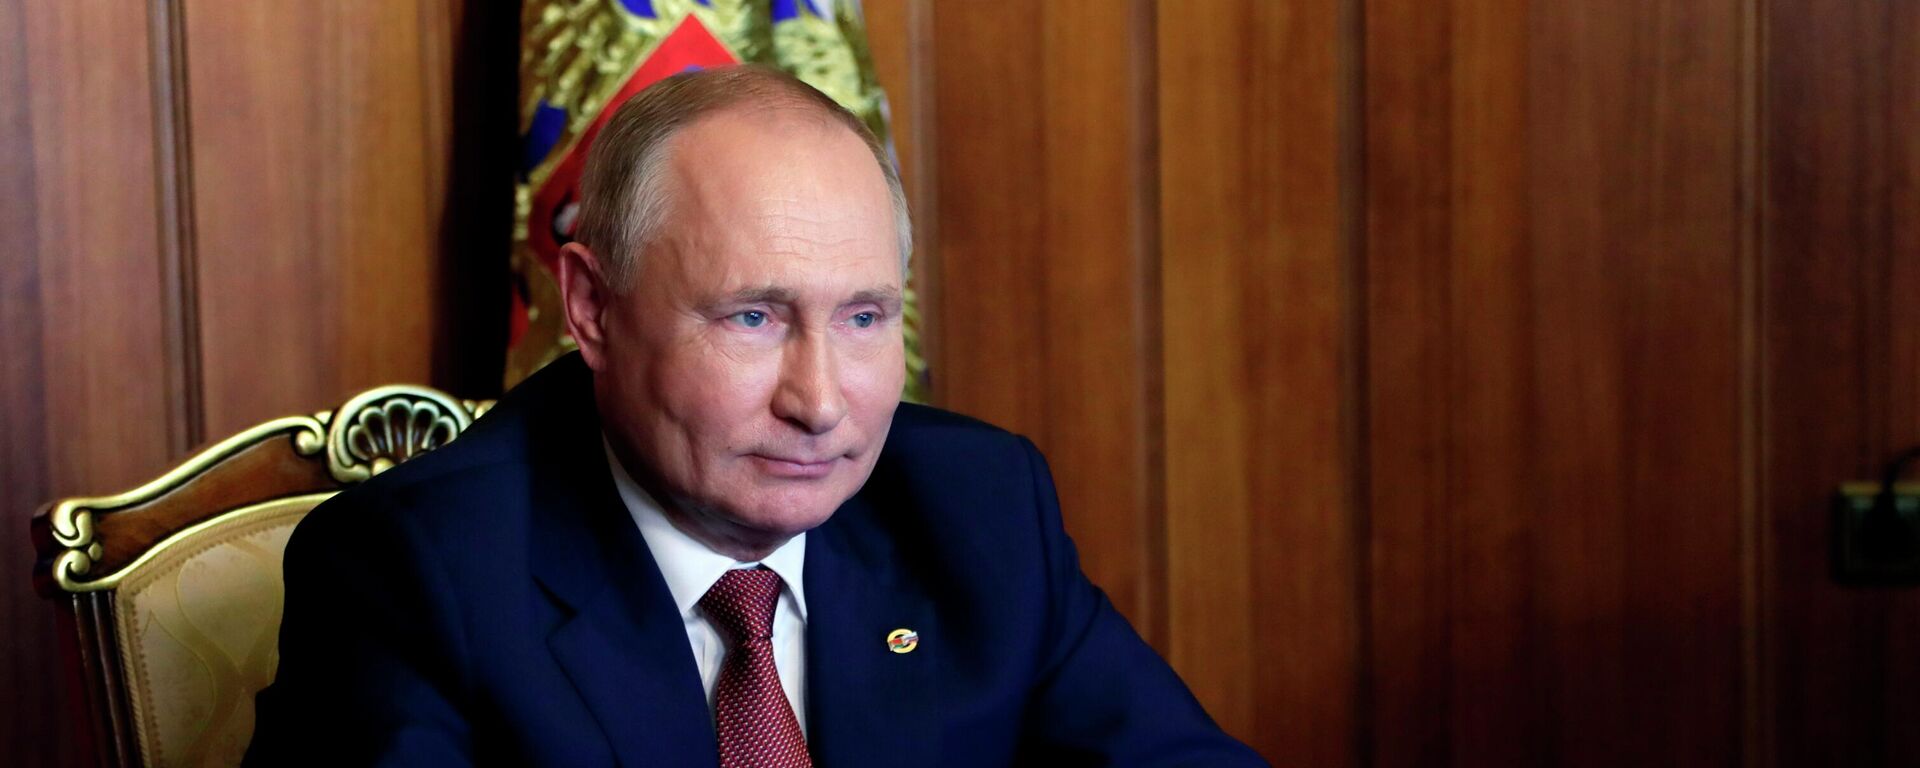 Vladímir Putin, presidente de Rusia - Sputnik Mundo, 1920, 08.11.2021